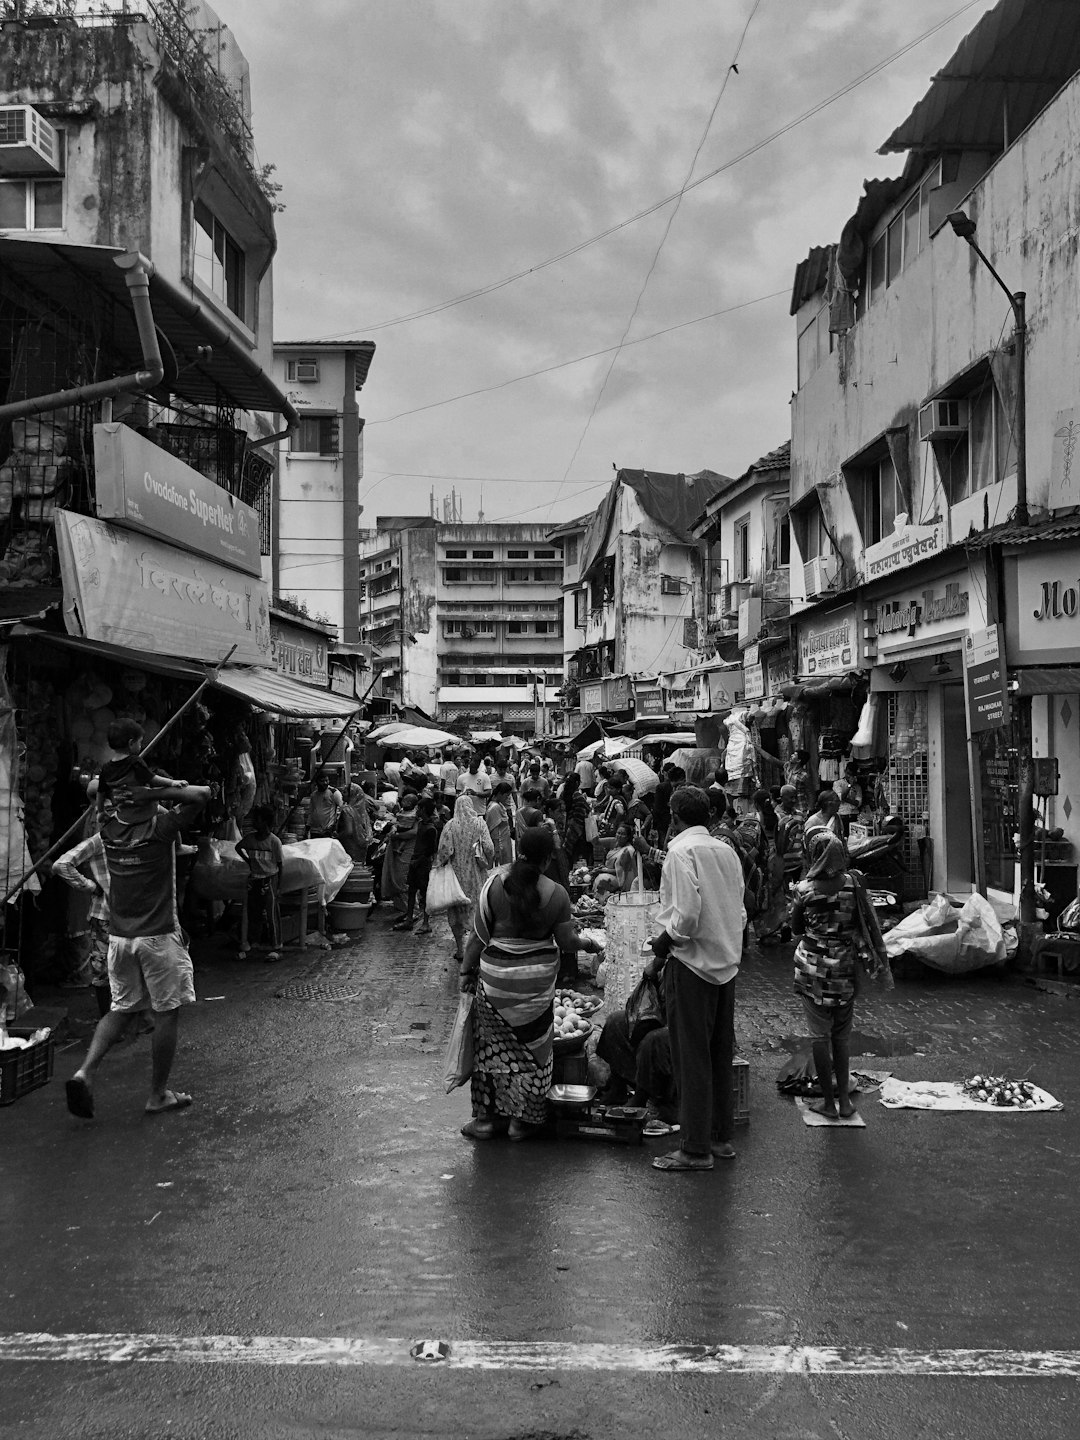 travelers stories about Town in Rajwadkar St, India